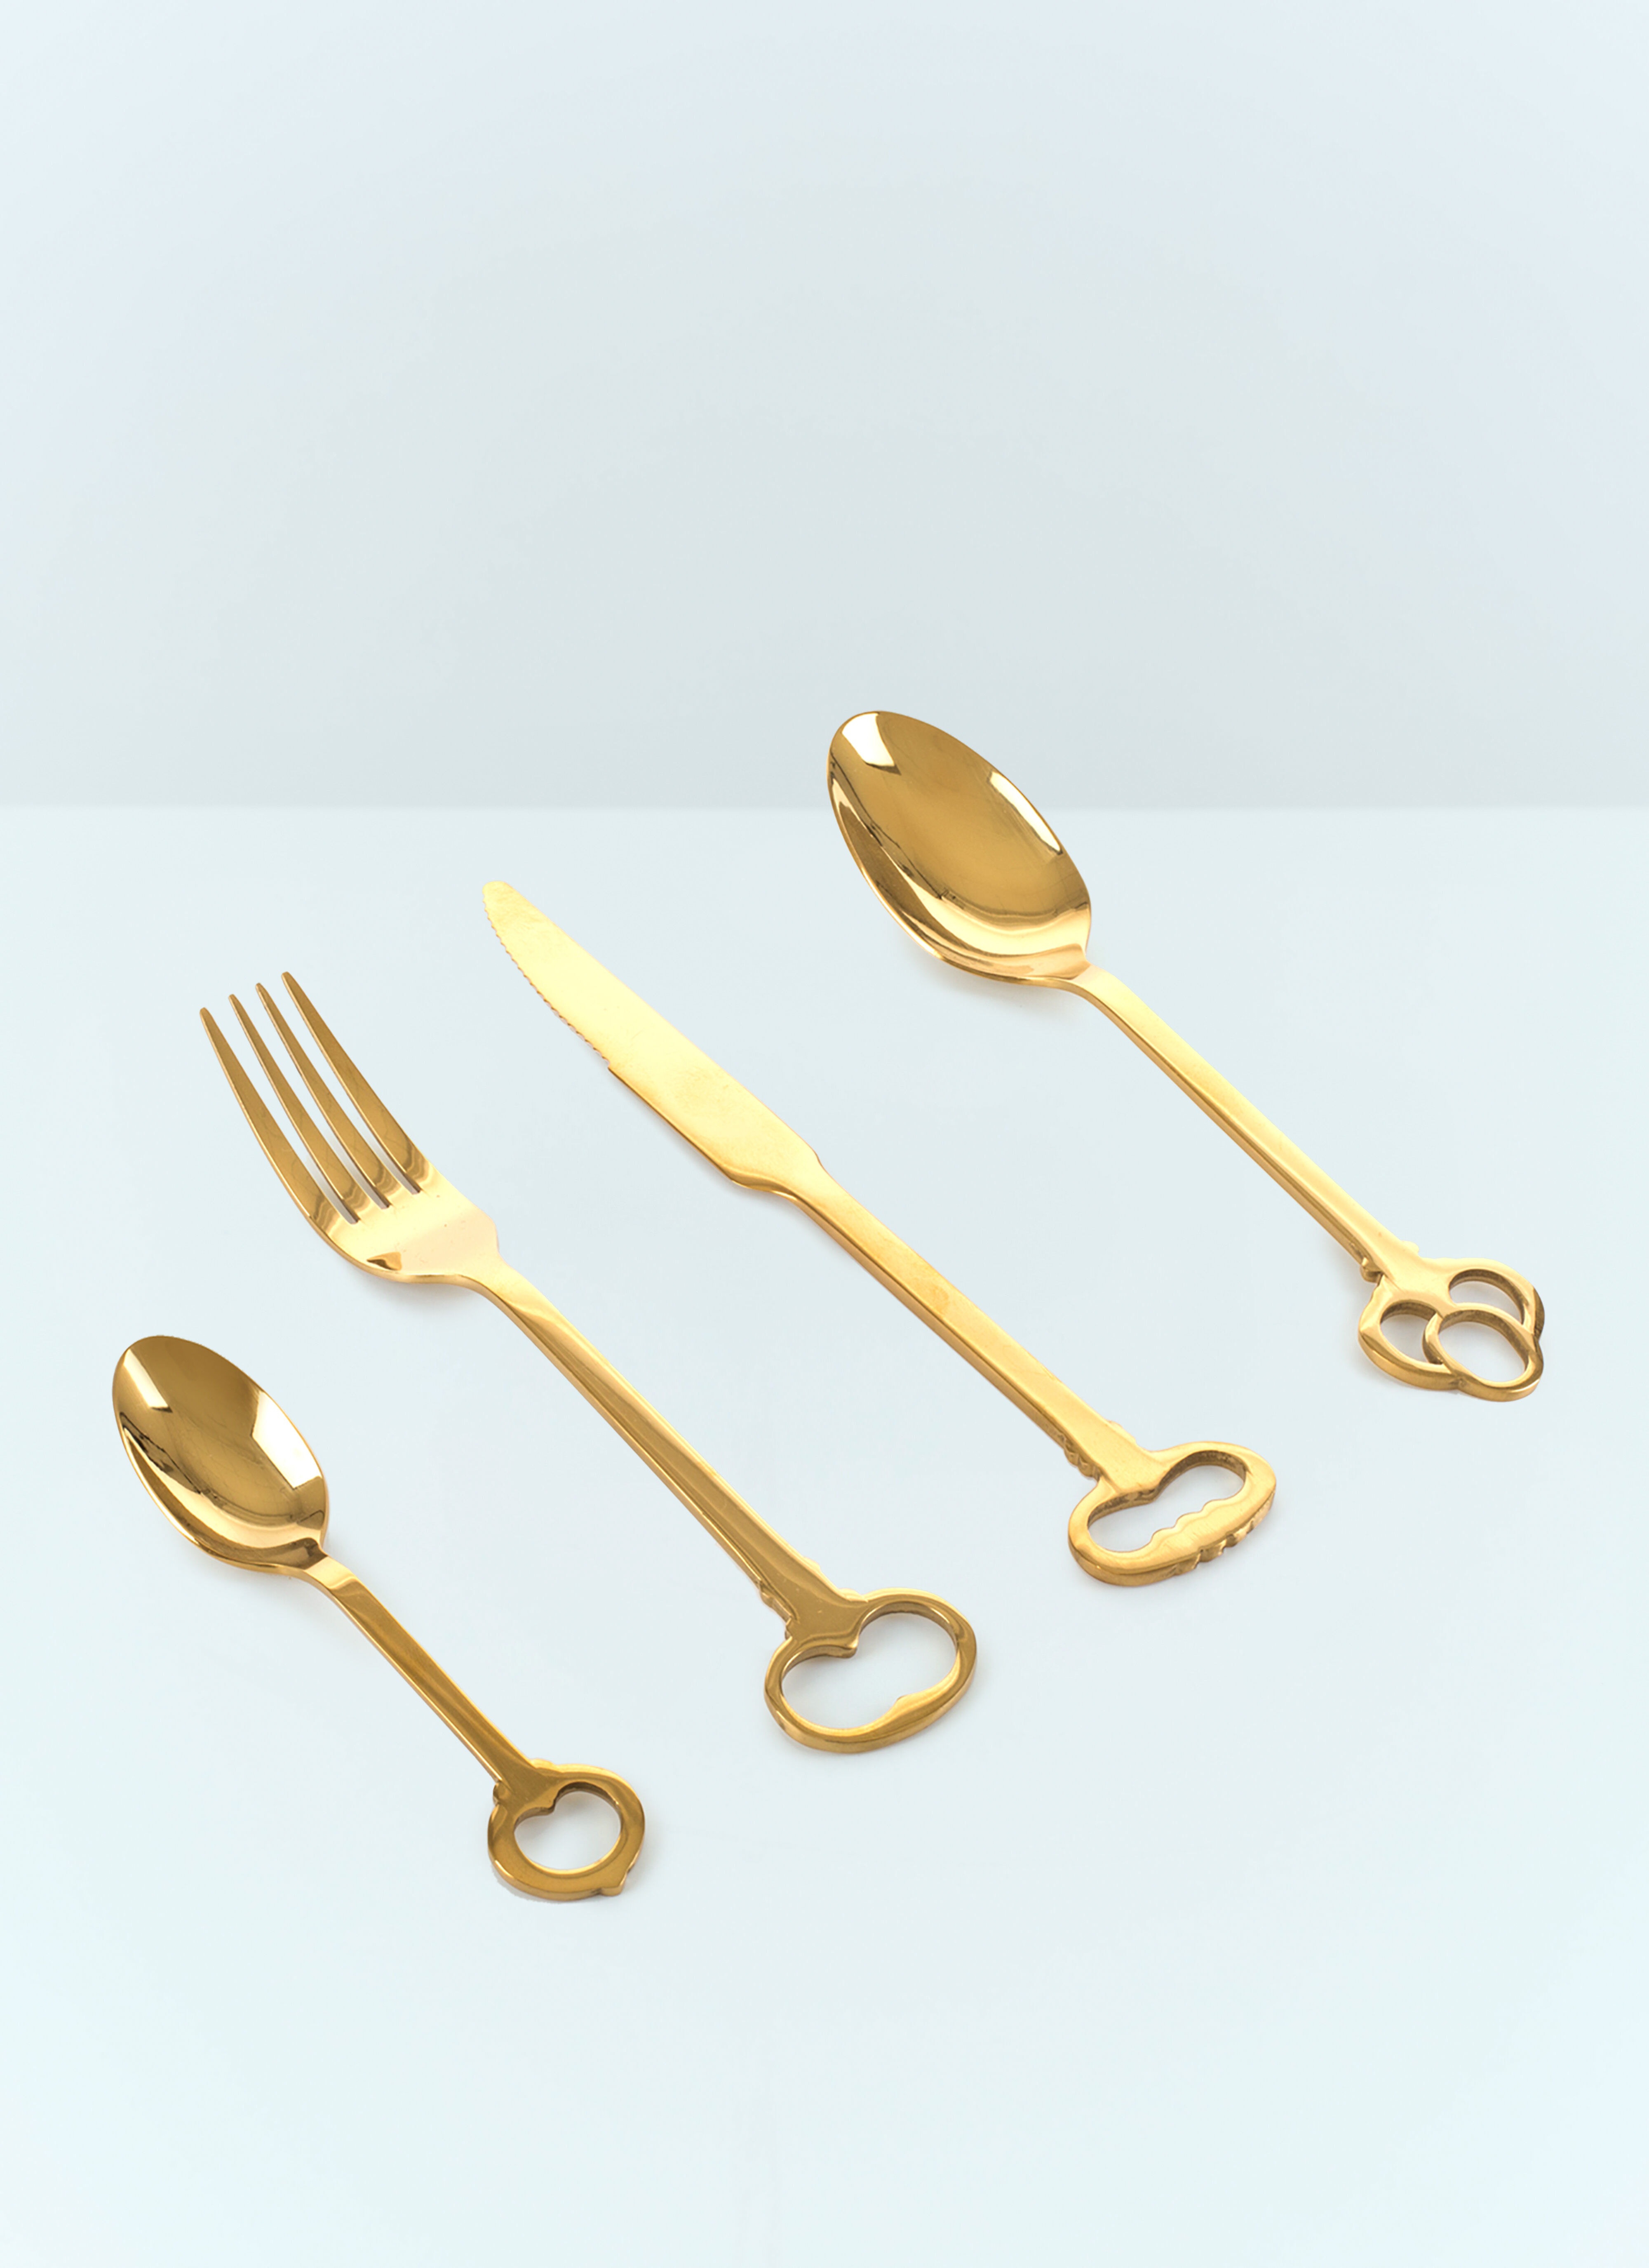 Seletti Keytlery Cutlery Set Multicolour wps0691129